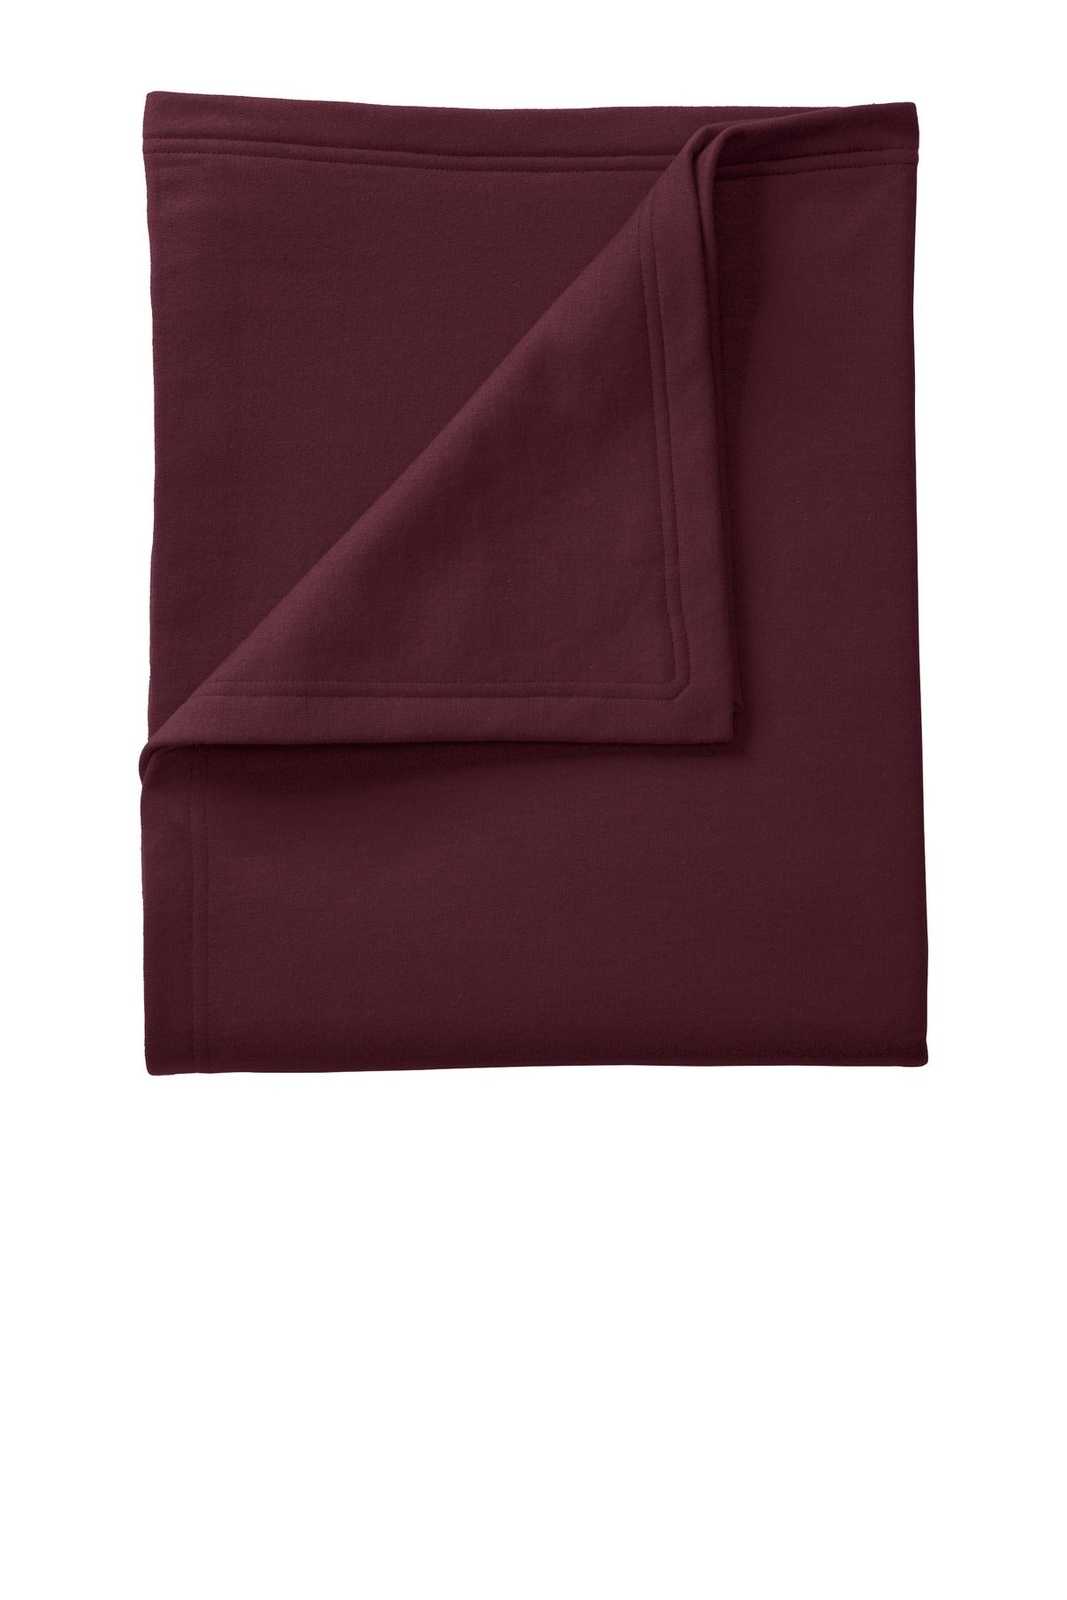 Port &amp; Company BP78 Core Fleece Sweatshirt Blanket - Maroon - HIT a Double - 1